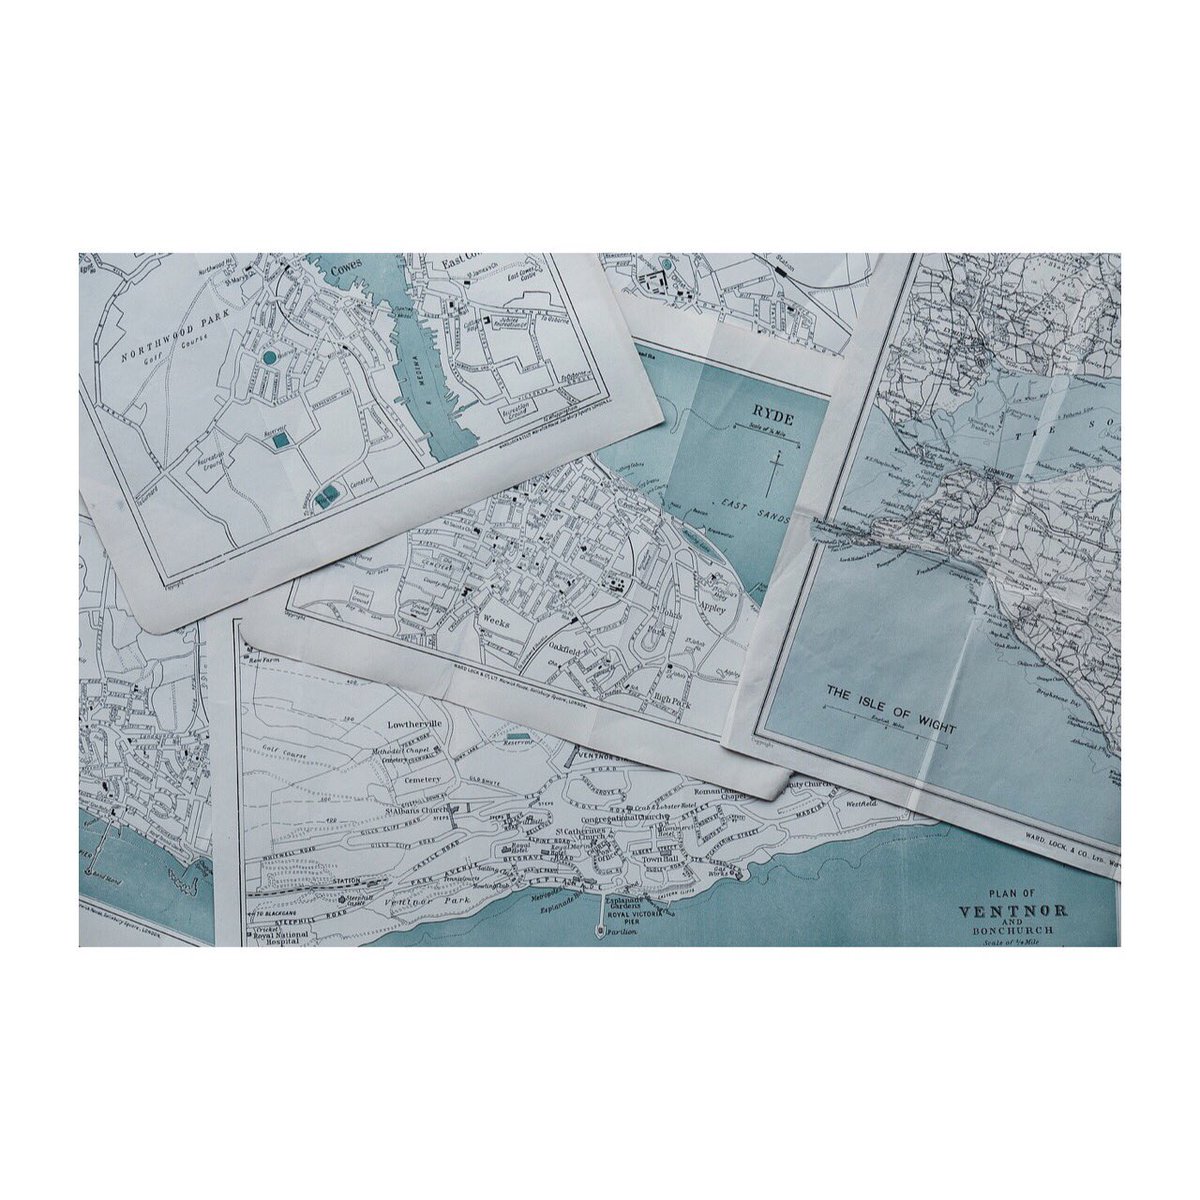 Inspiration - Isle of Wight and Ryde 📷 by Annie Spratt #inspiration #art #photography #map #sea #nautical #maps #nauticalcharts #sailing #sailing #lifeatsea #jewelry #aubarede7 #inspirationaubarede7